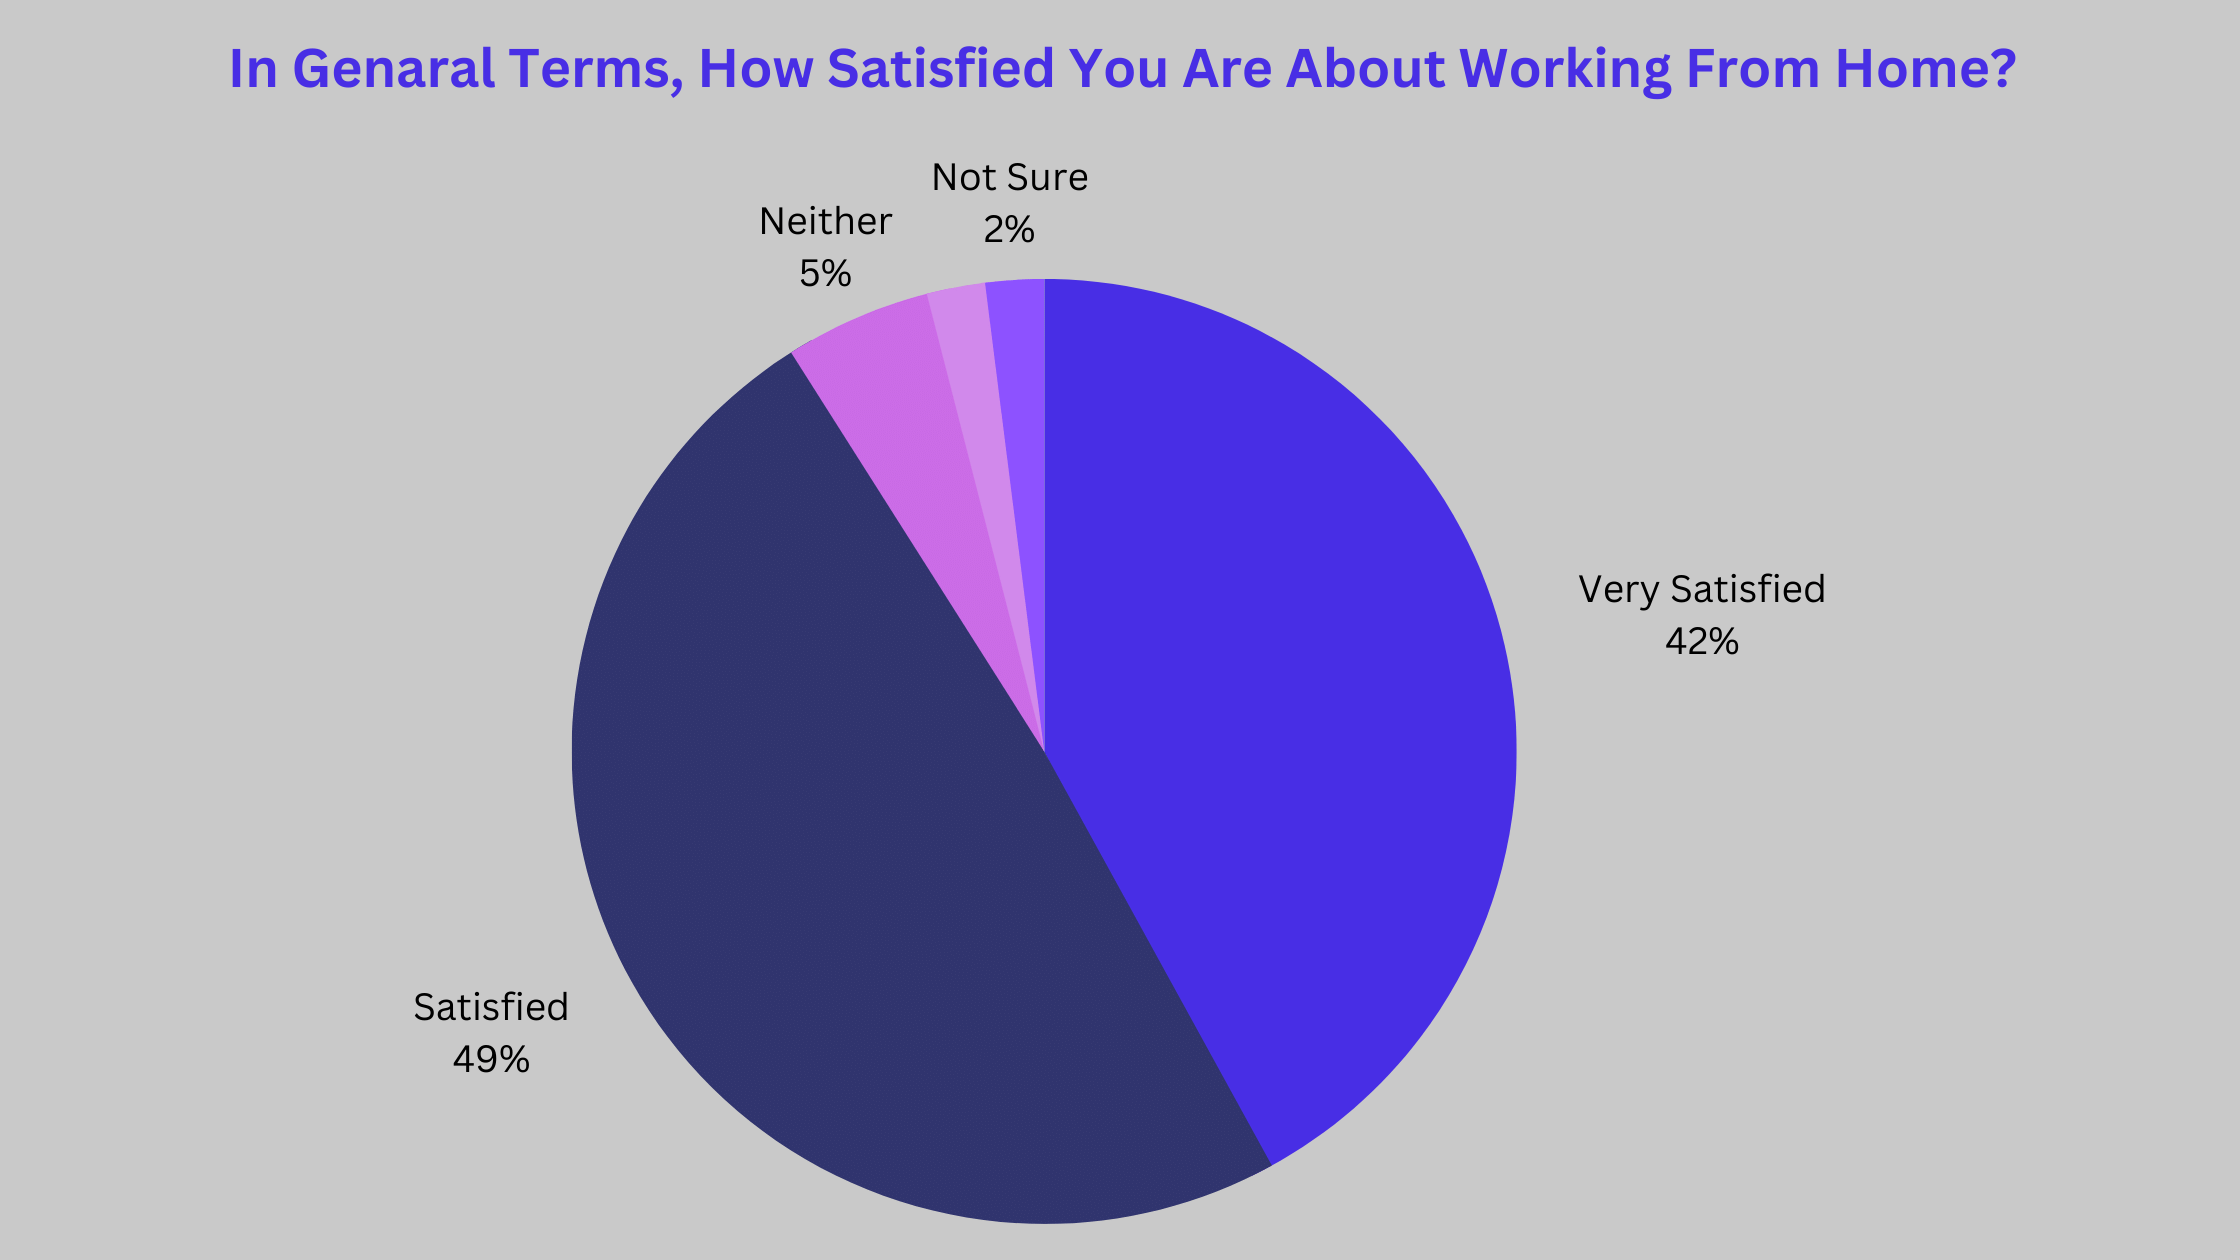 Employees Showed Satisfaction